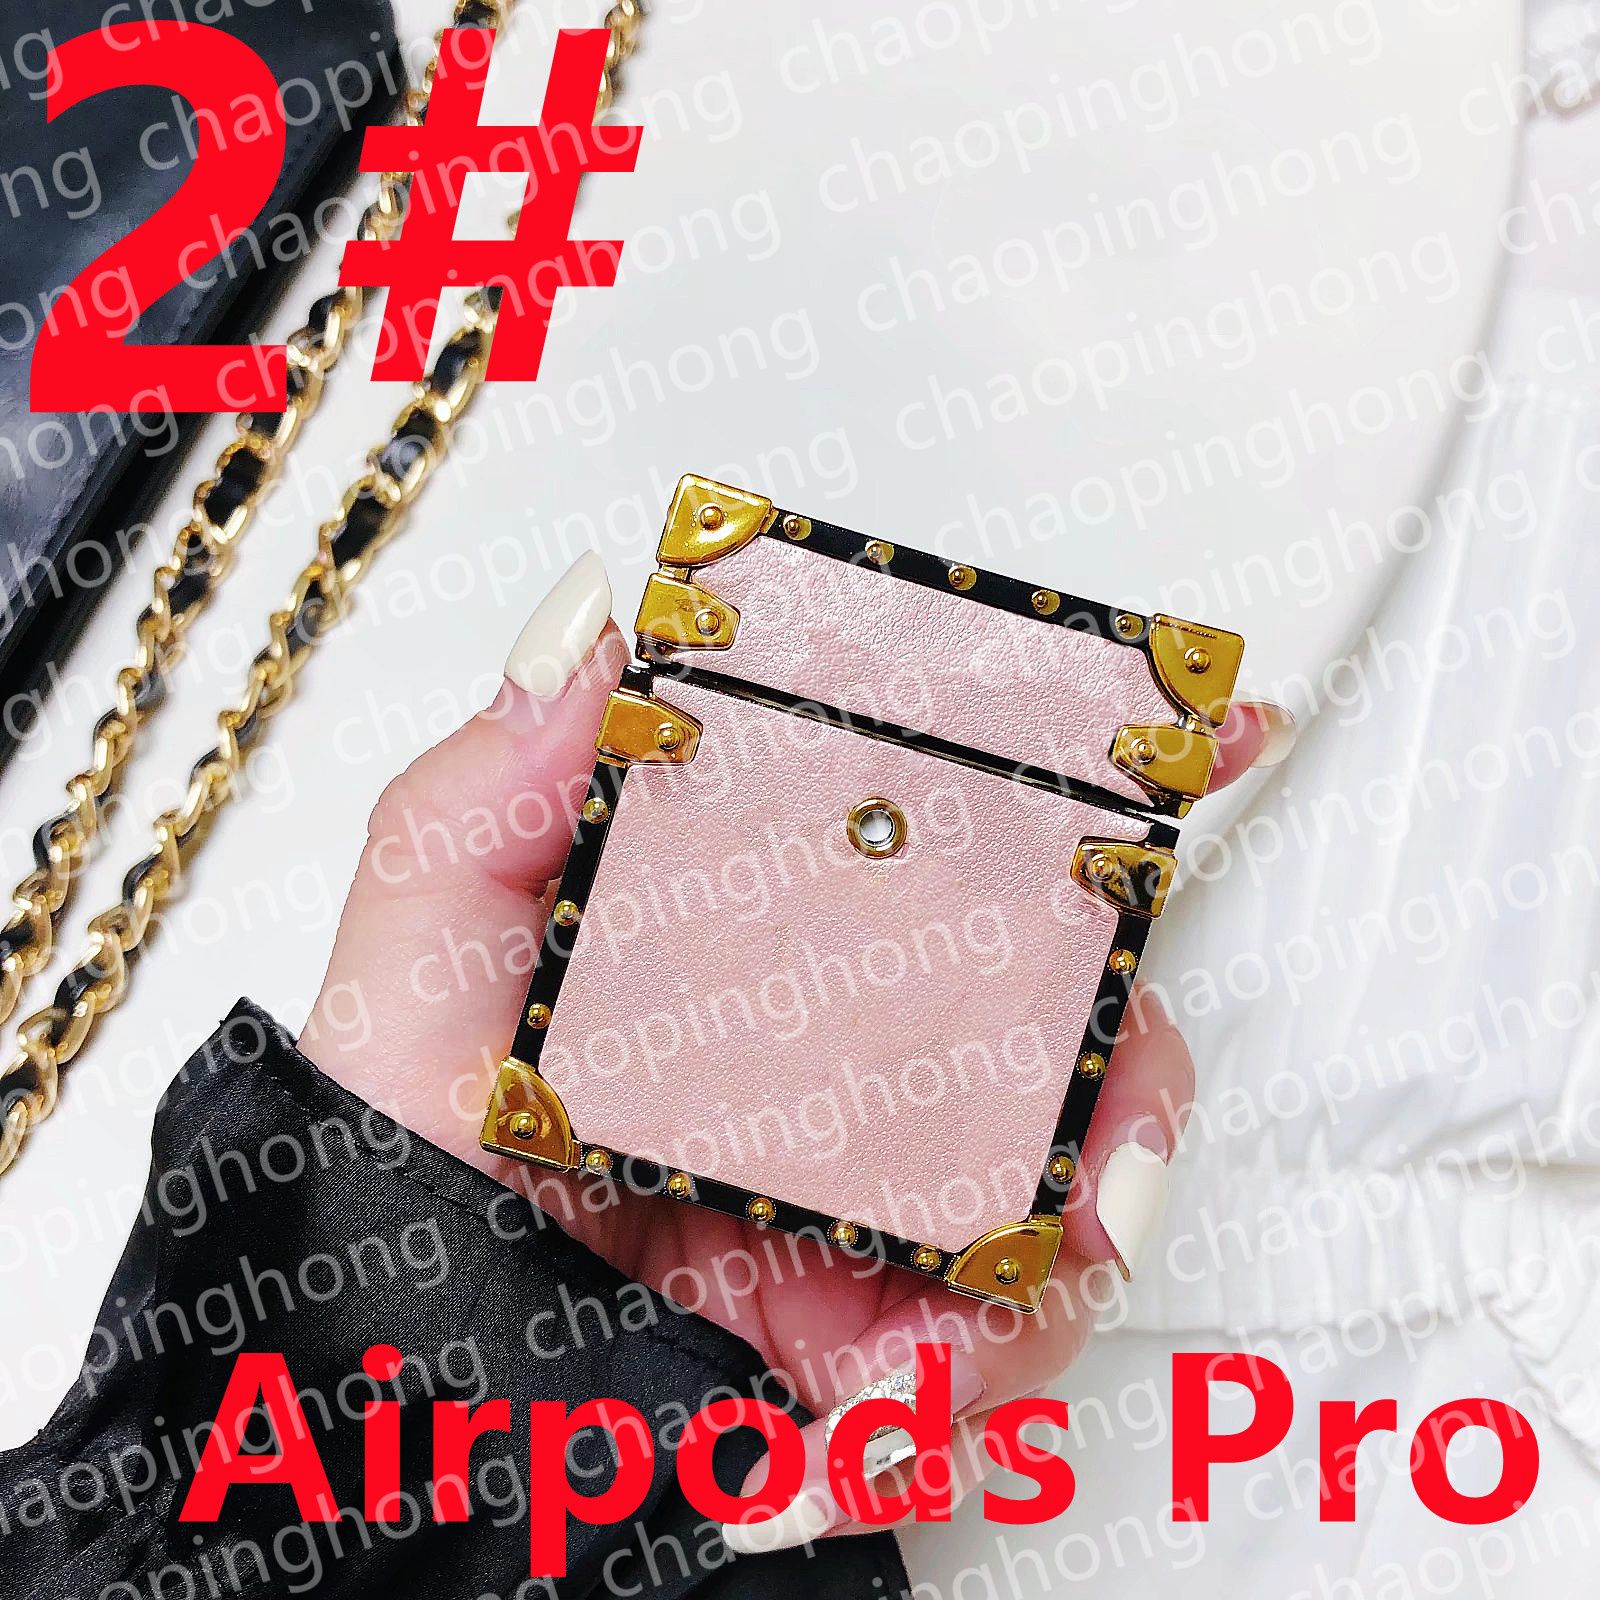 2 # [g] airpods pro + logotipo